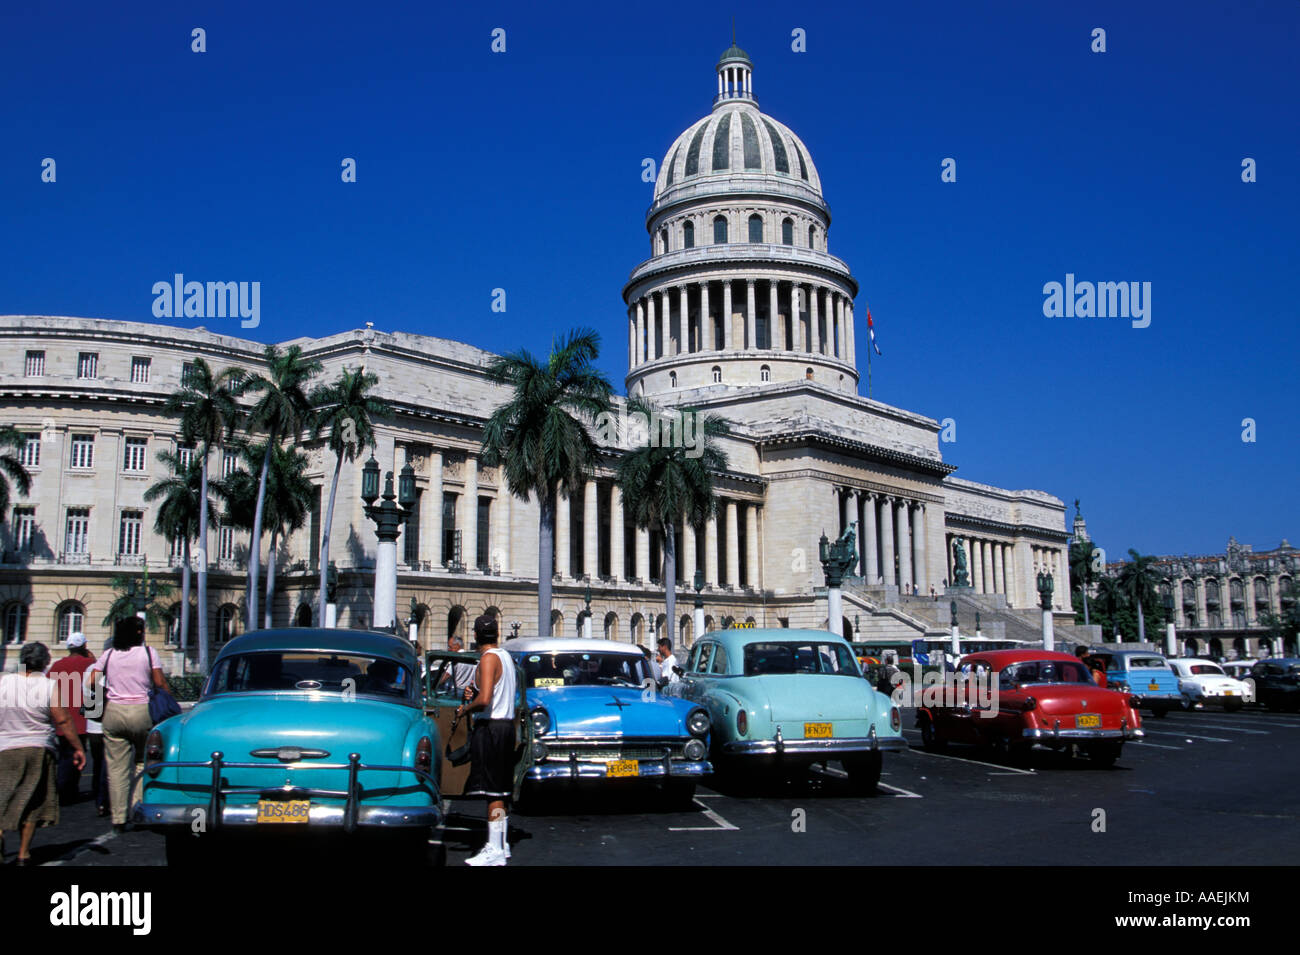 Alte amerikanische Taxis vor Capitolio Nacional alte Havanna Kuba Karibik Stockfoto